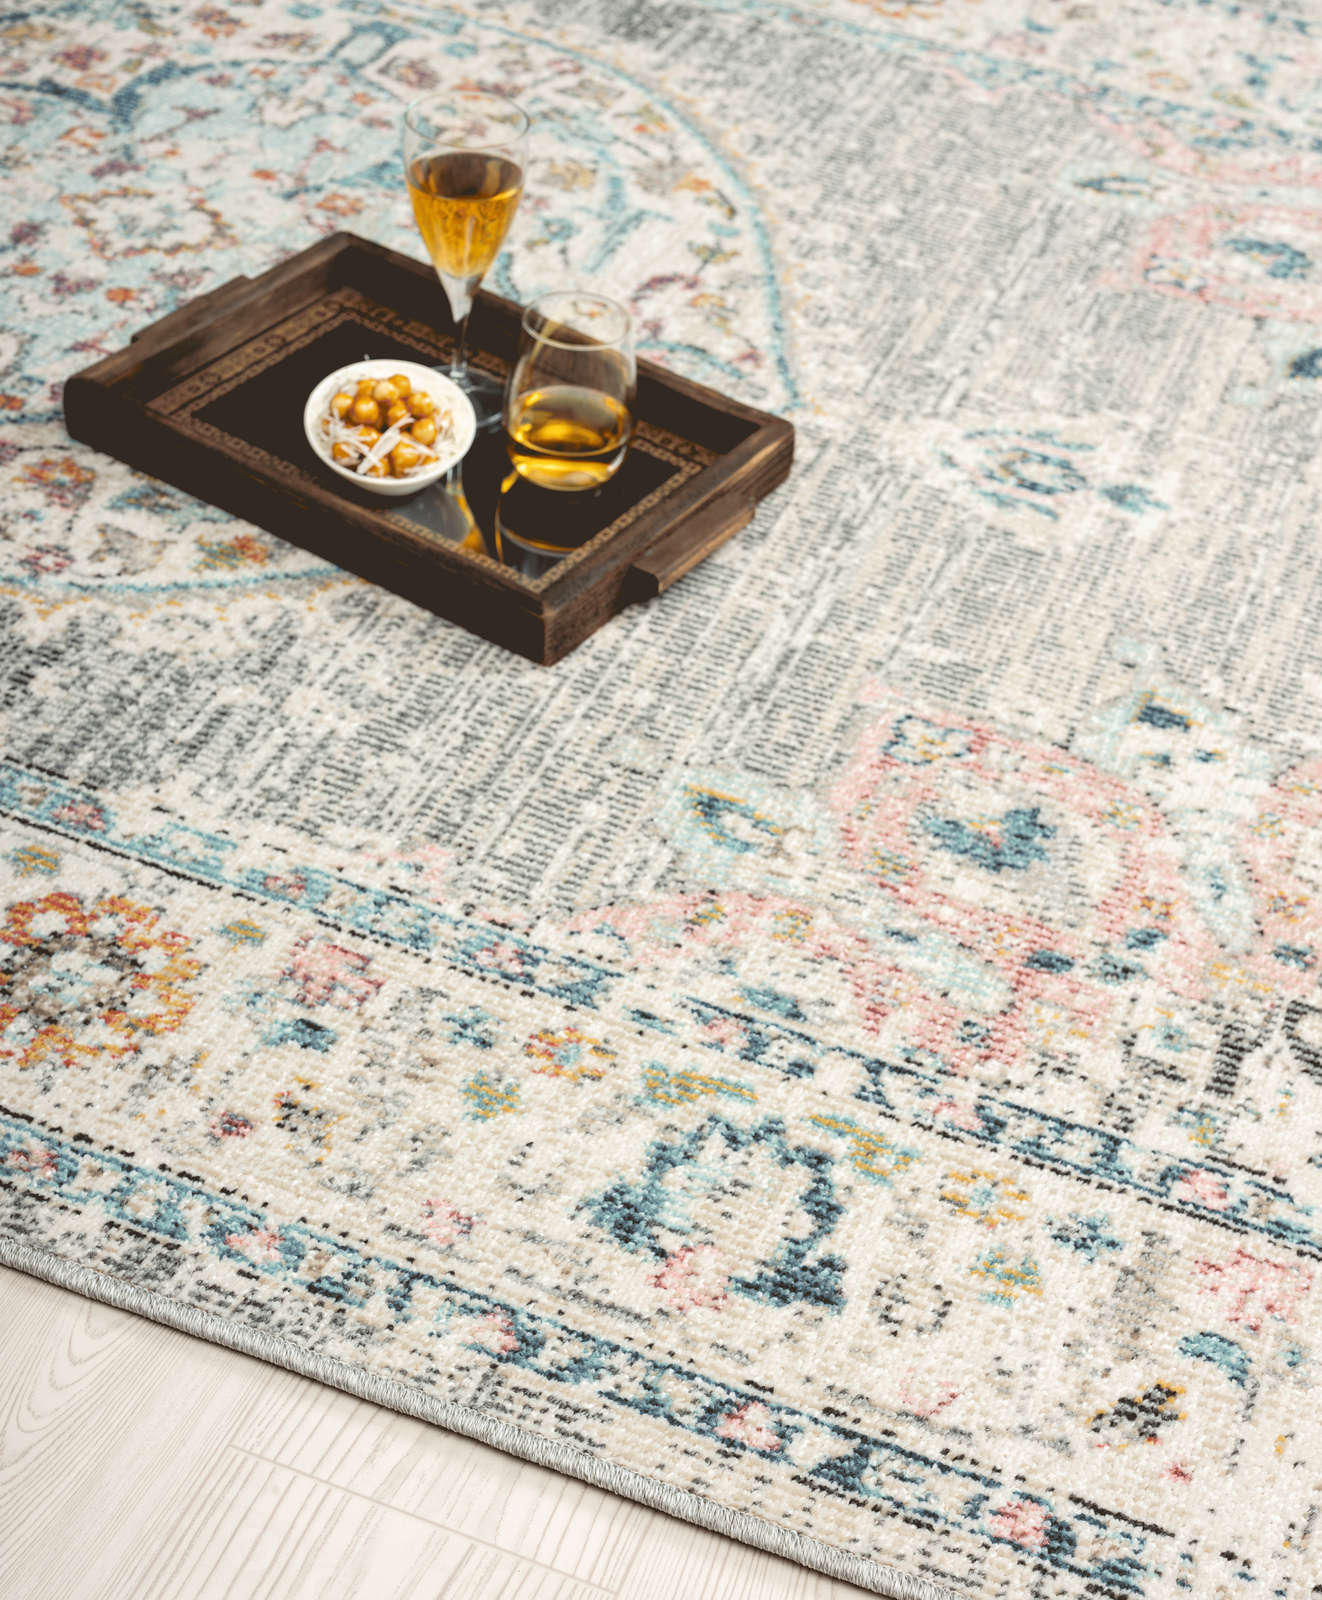             Grey flatweave carpet as runner - 300 x 80 cm
        